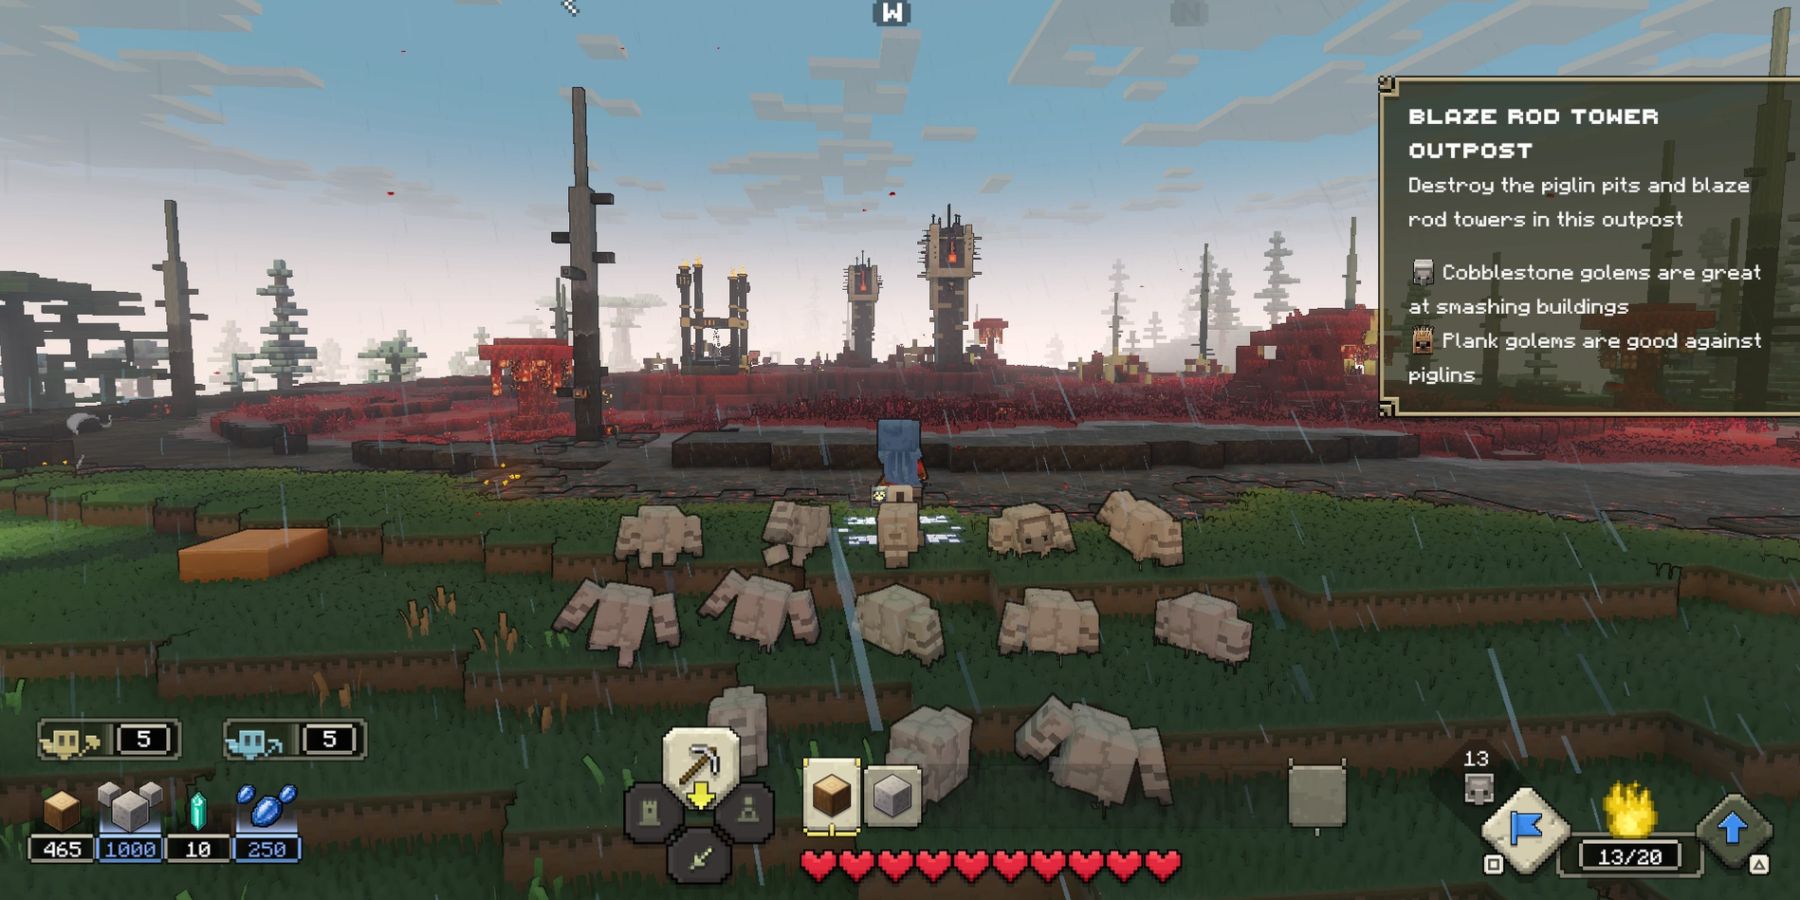 The Blaze Tower Outpost in Minecraft Legends